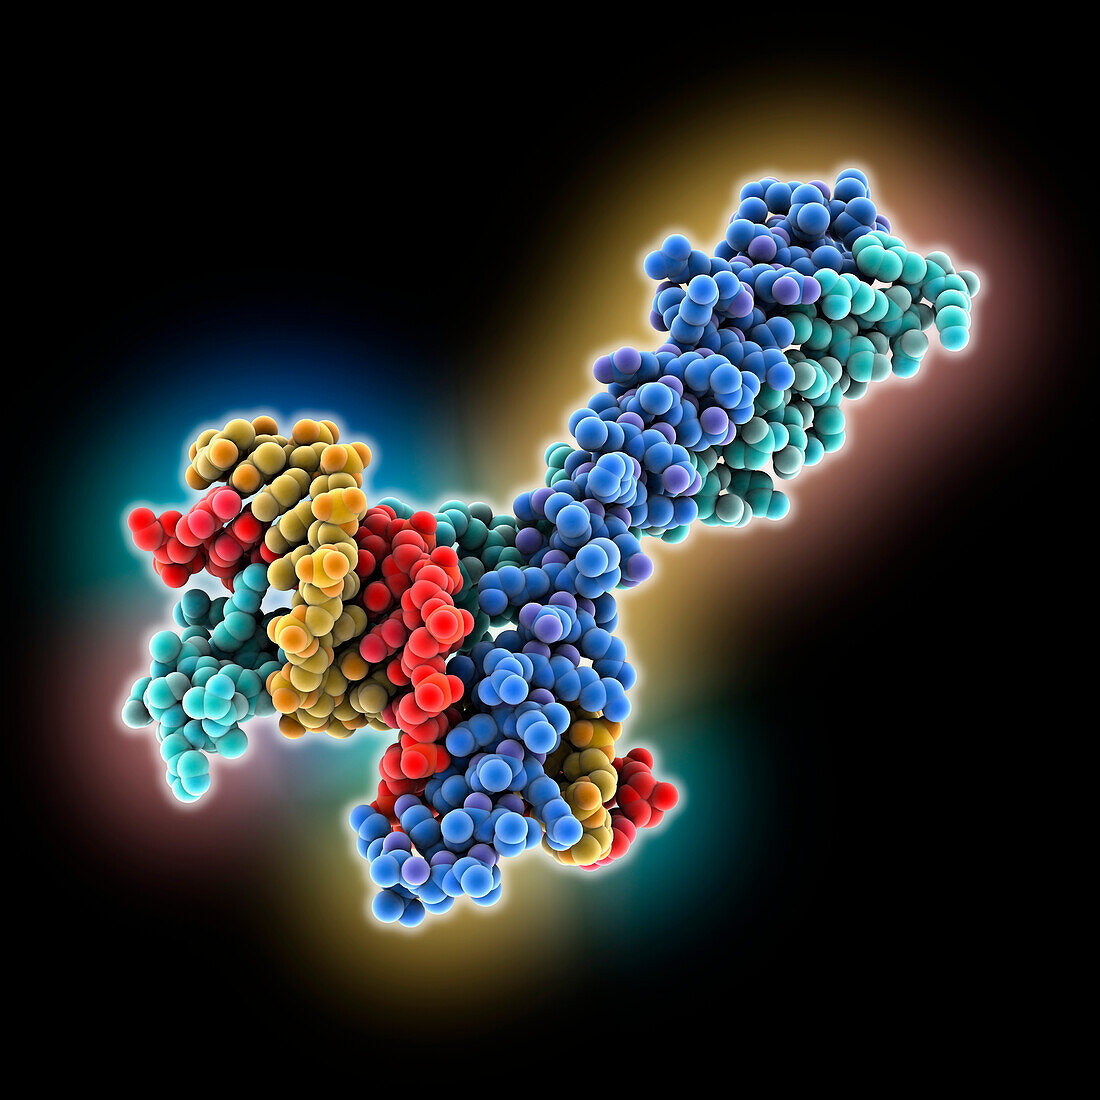 CCAAT-enhancer-binding protein complex, molecular model